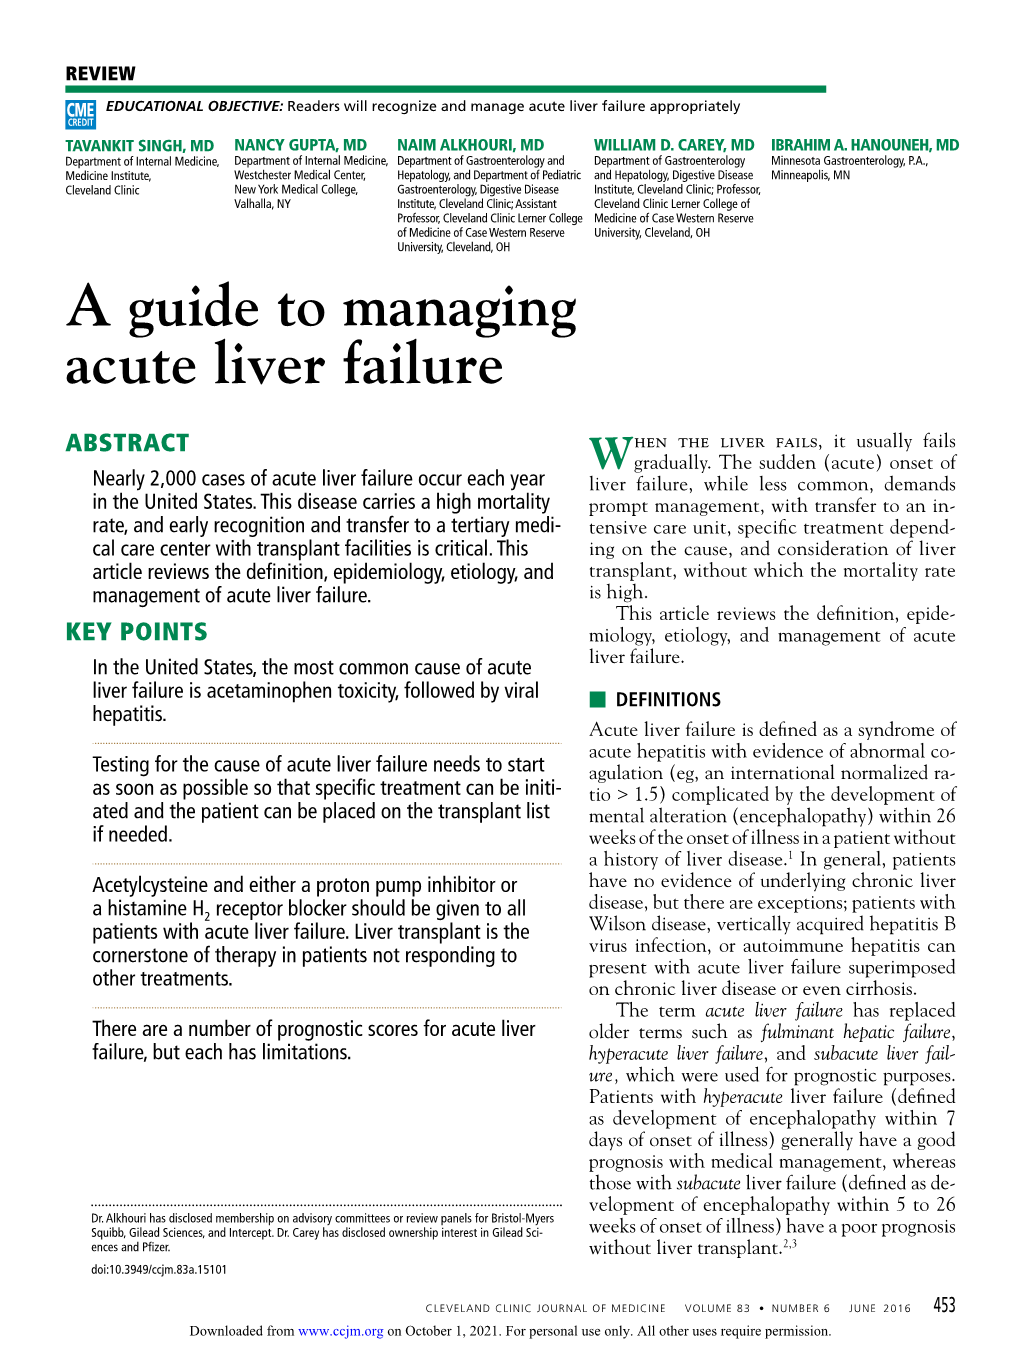 A Guide to Managing Acute Liver Failure